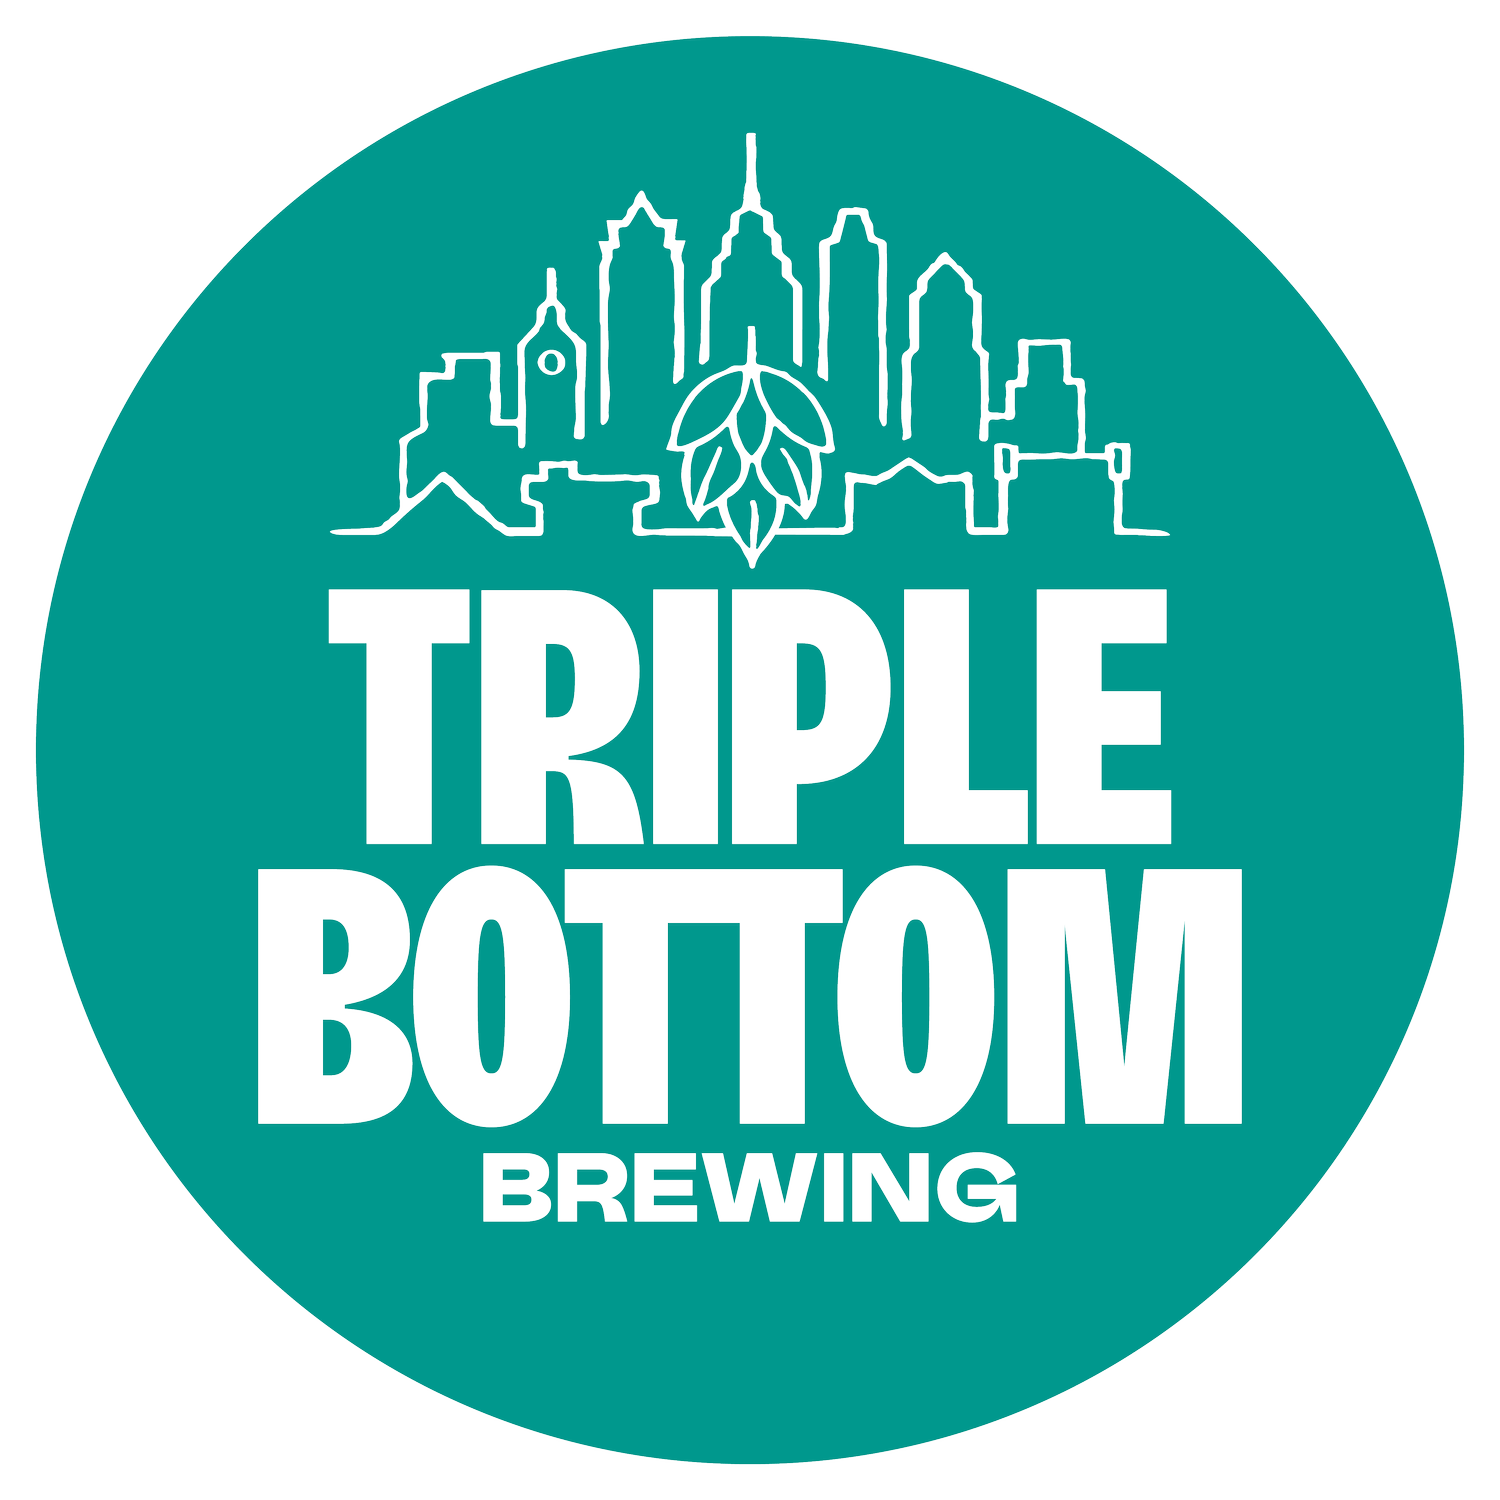 Triple Bottom Brewing